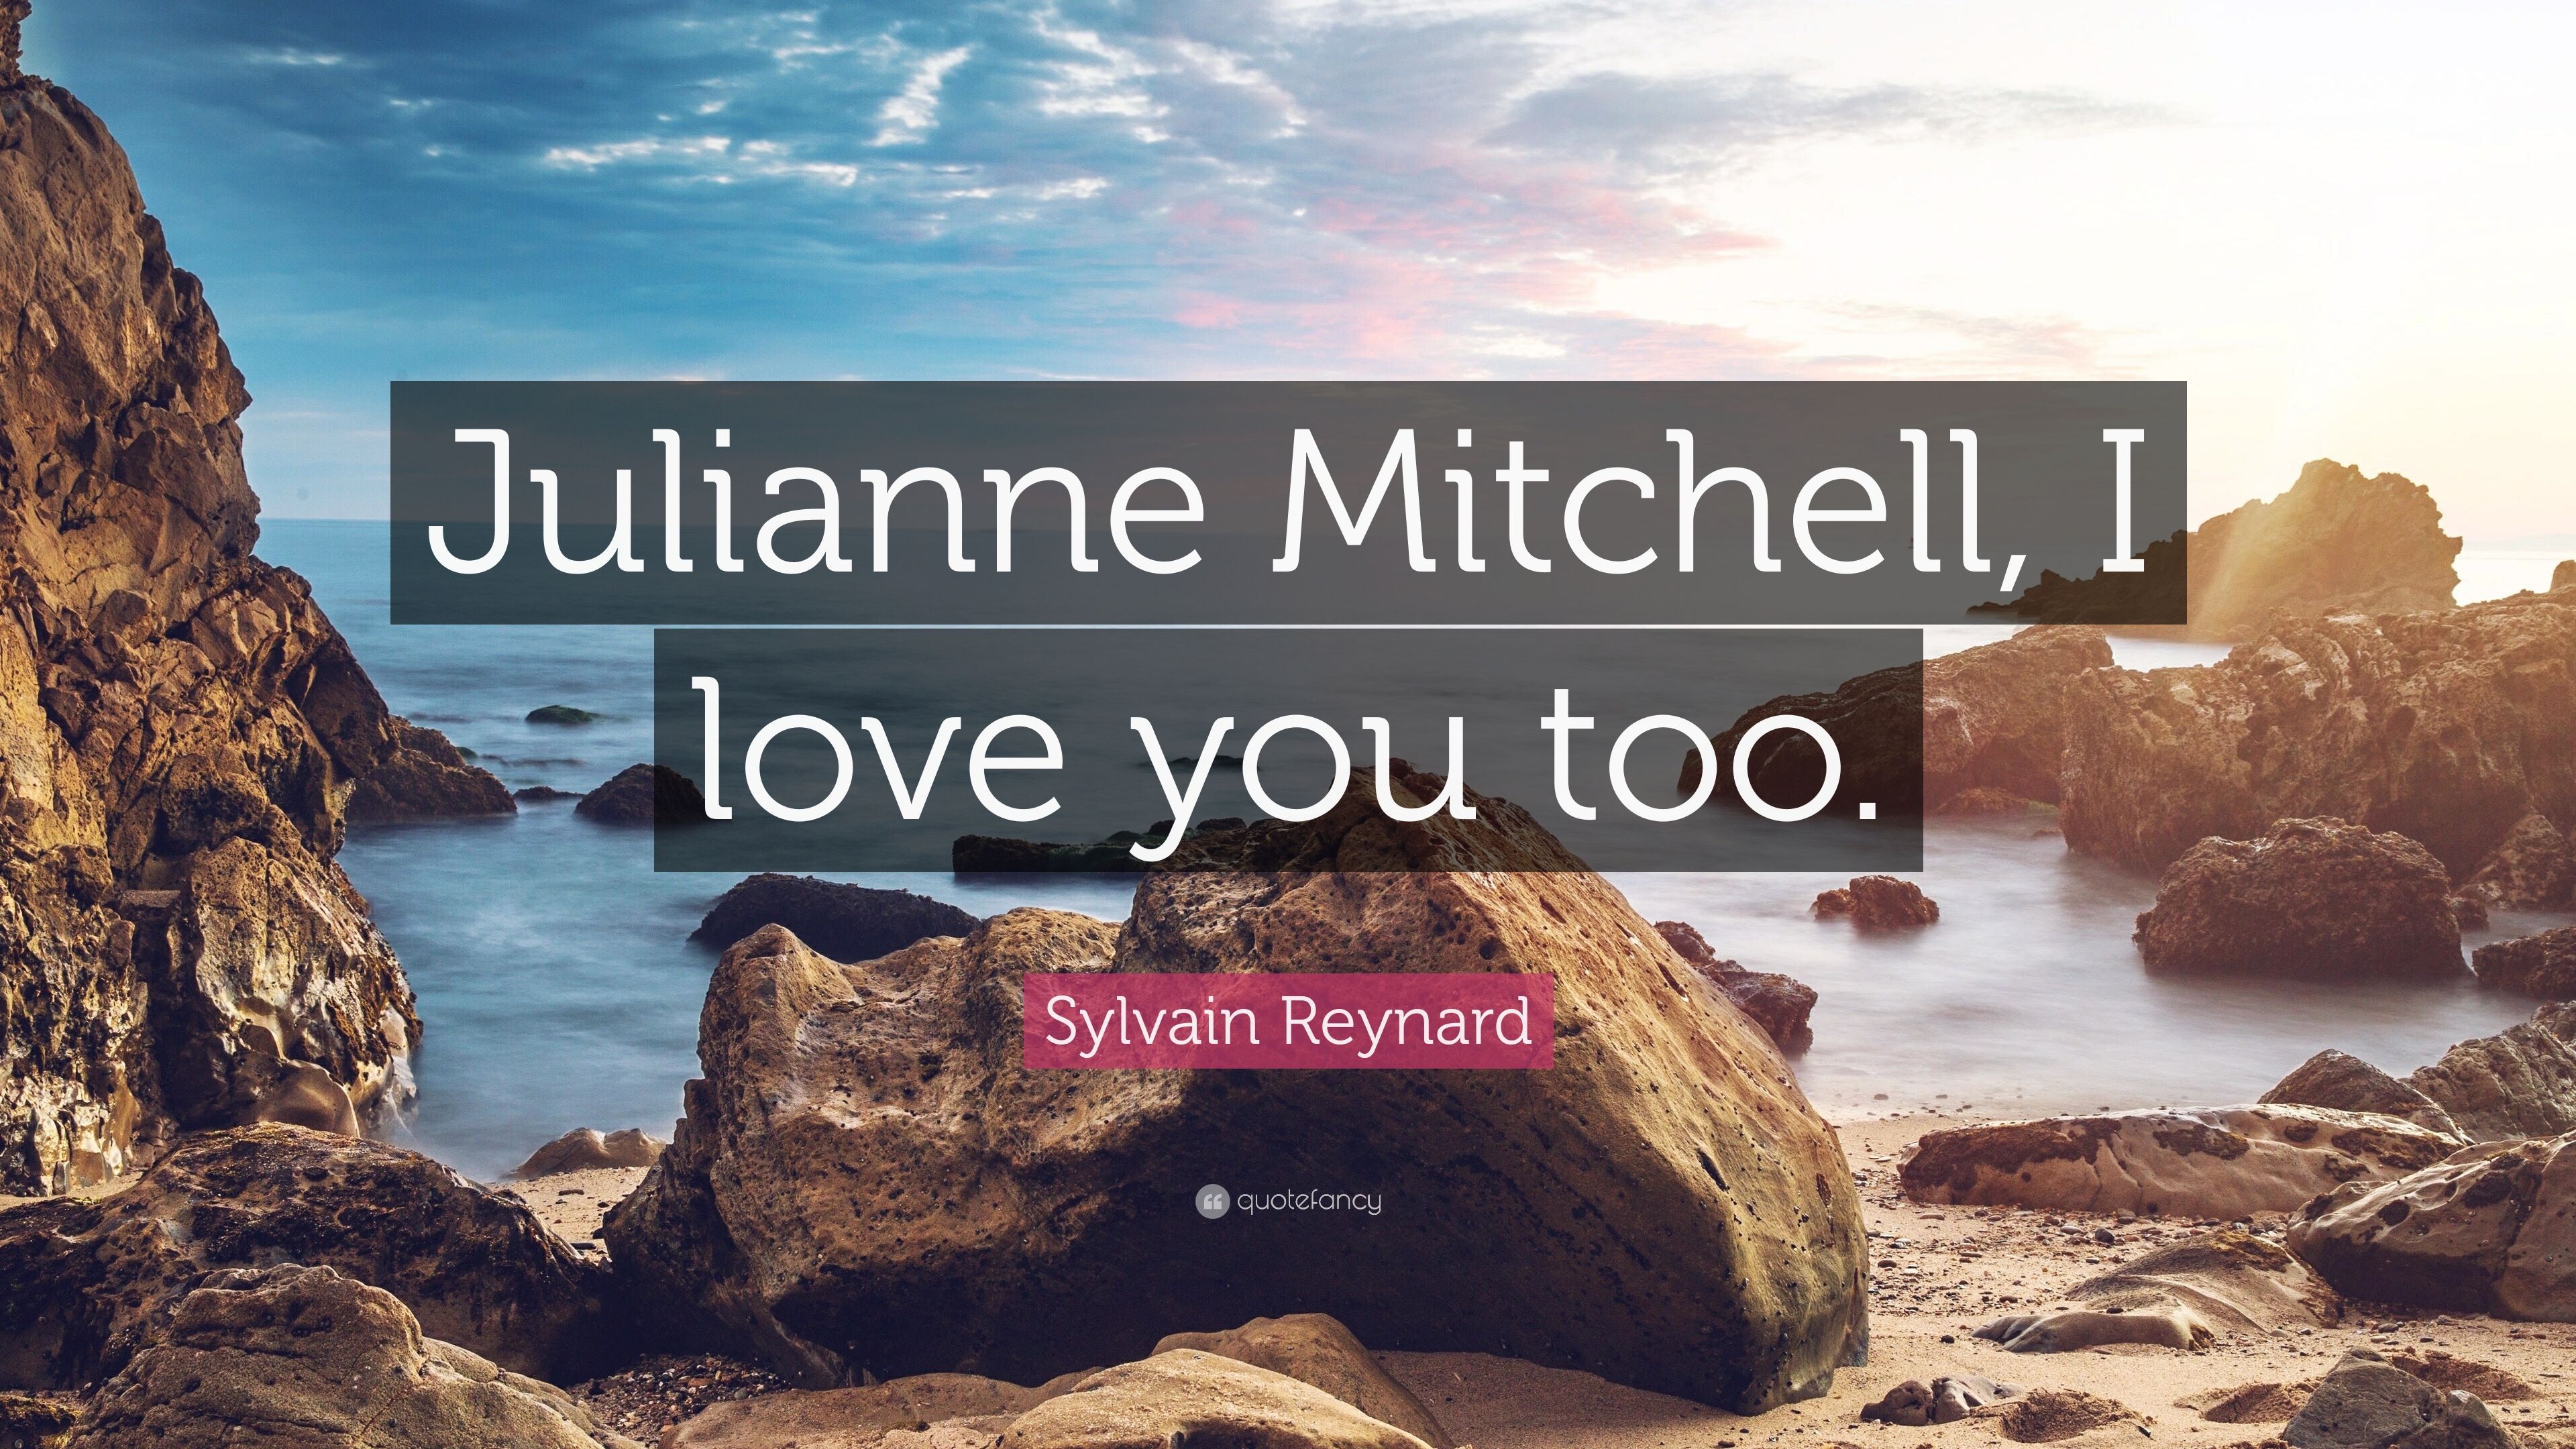 Sylvain Reynard Quote: “Julianne Mitchell, I love you too.” (7 wallpaper)